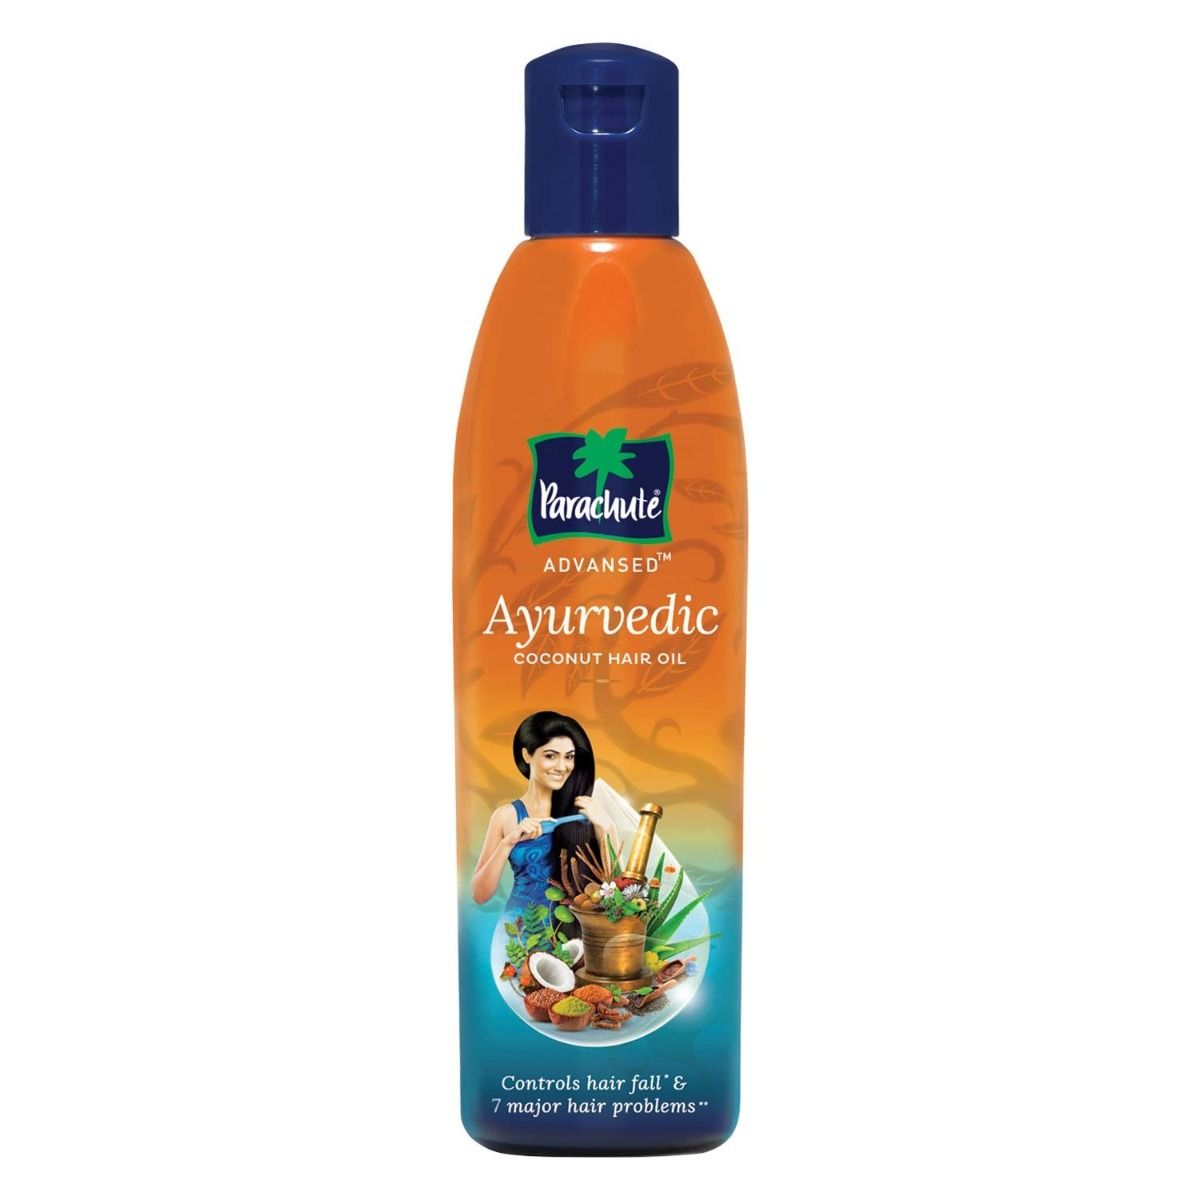 Parachute Advansed Ayurvedic  Coconut Hair Oil, 190 ml, Pack of 1 